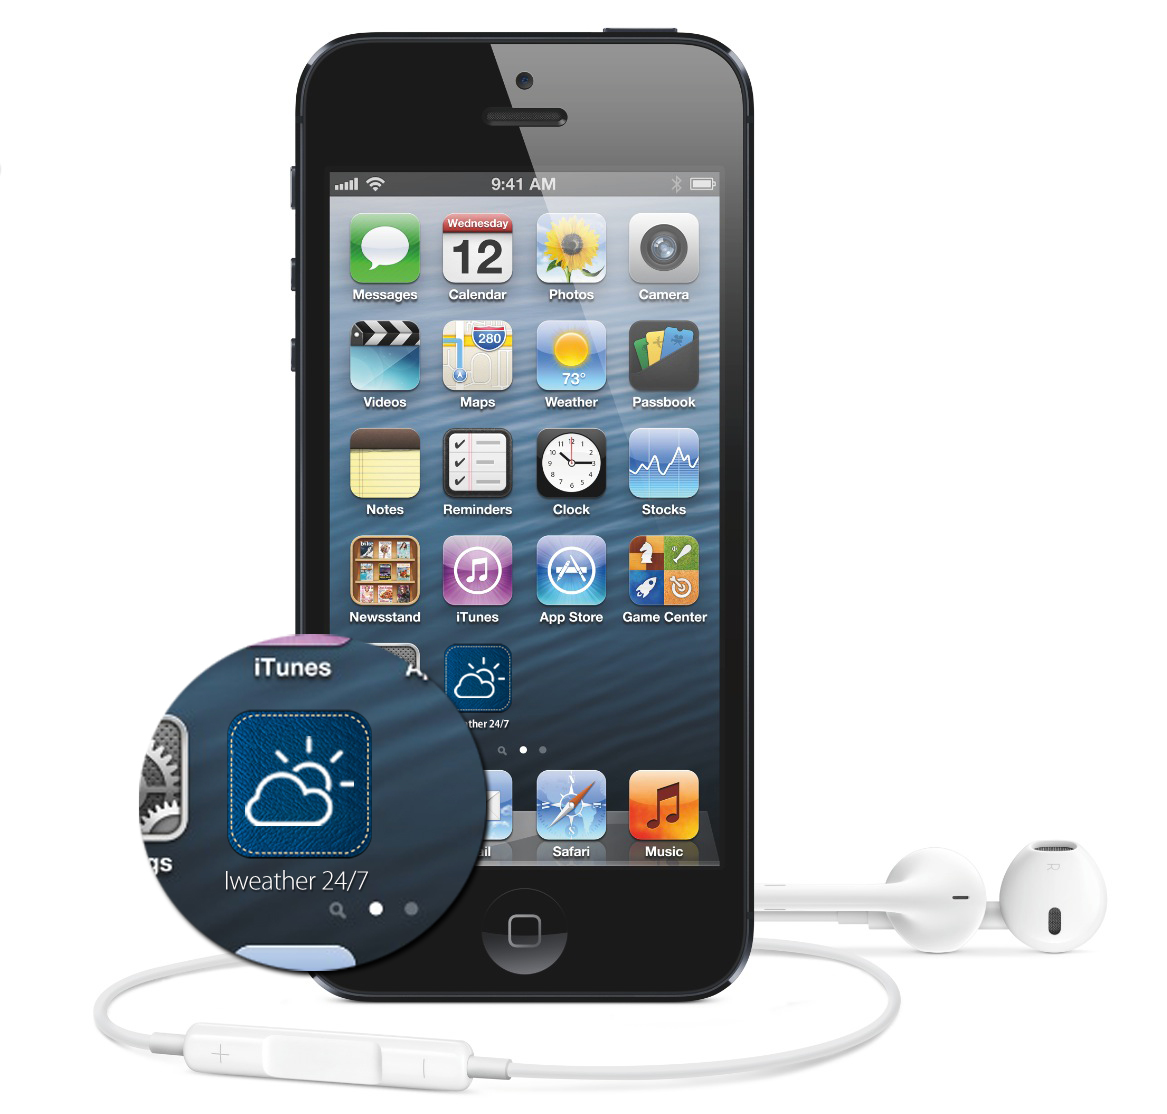 Iweather 24/7 Mobile app UI iphone iPad